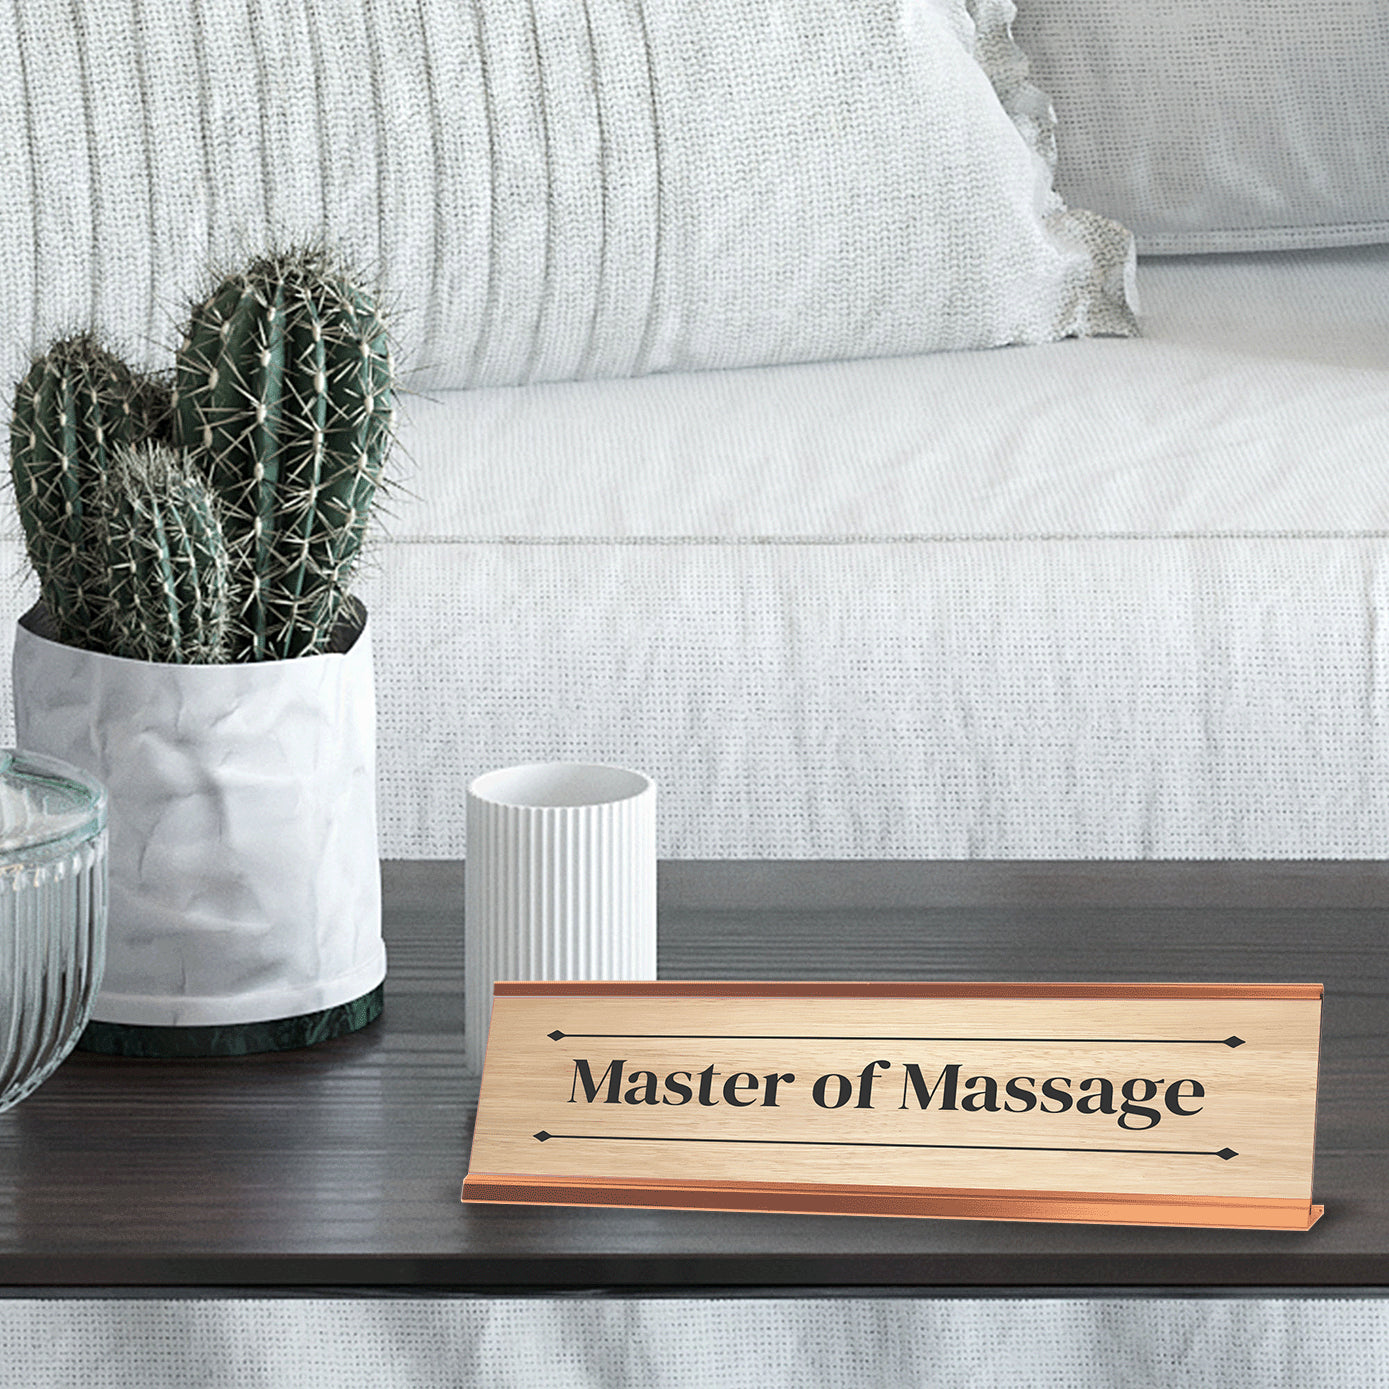 Master of Massage Rose Gold Frame Desk Sign (2x8") Novelty Workplace and Home Office Decoration For Him